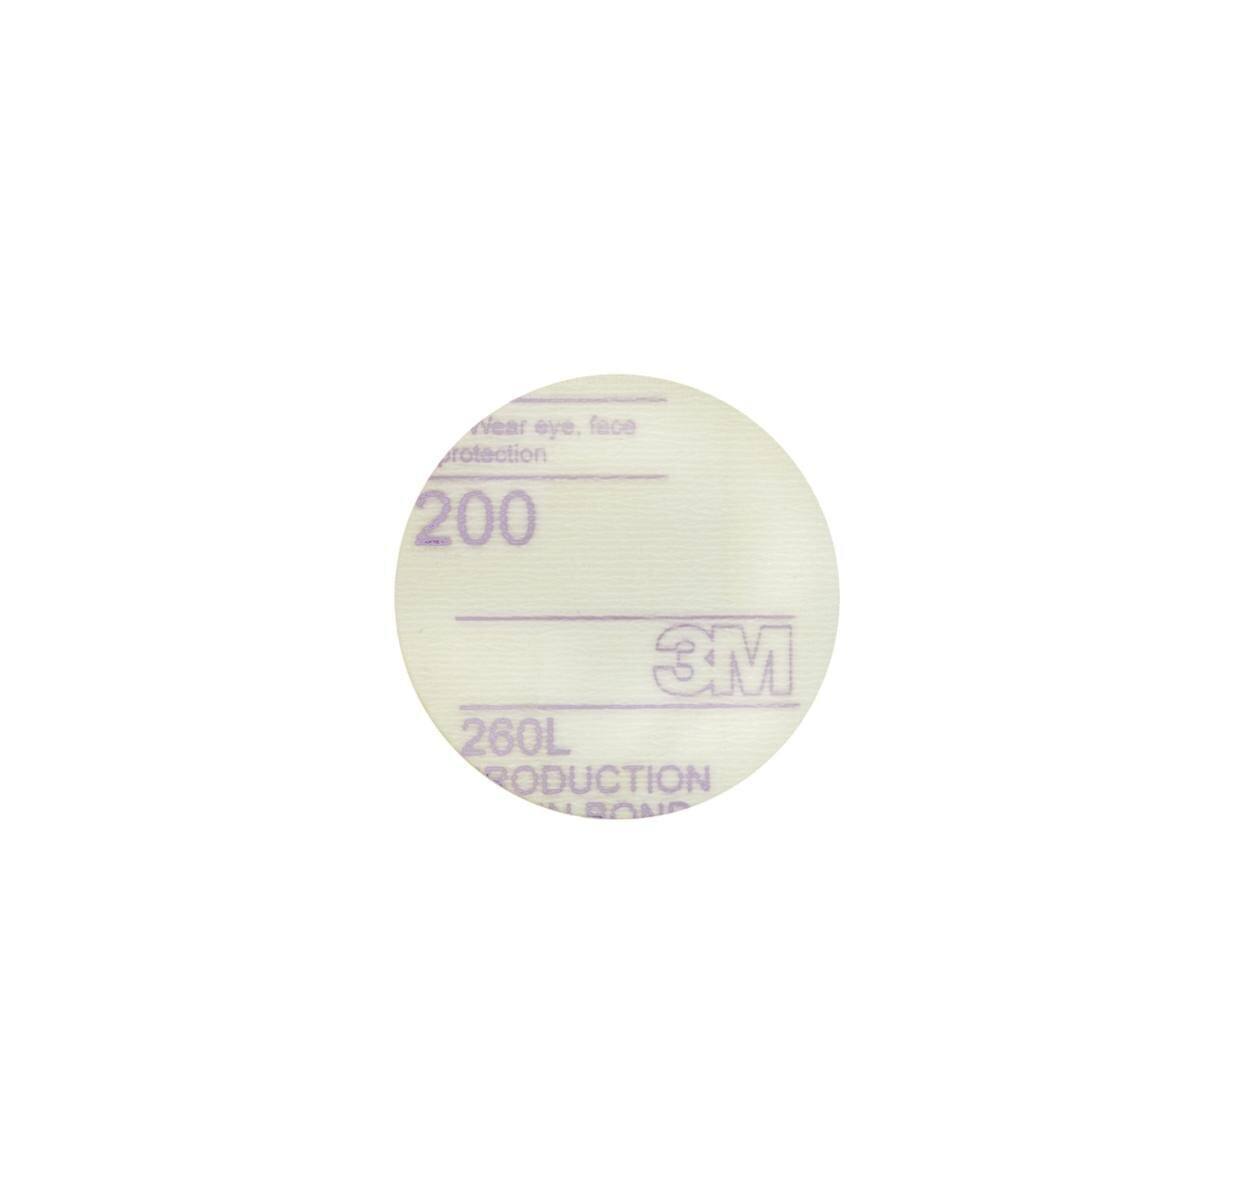 Disco adhesivo de gancho y bucle 3M Hookit 260L, blanco, 76 mm, P1200, sin perforar #E00908